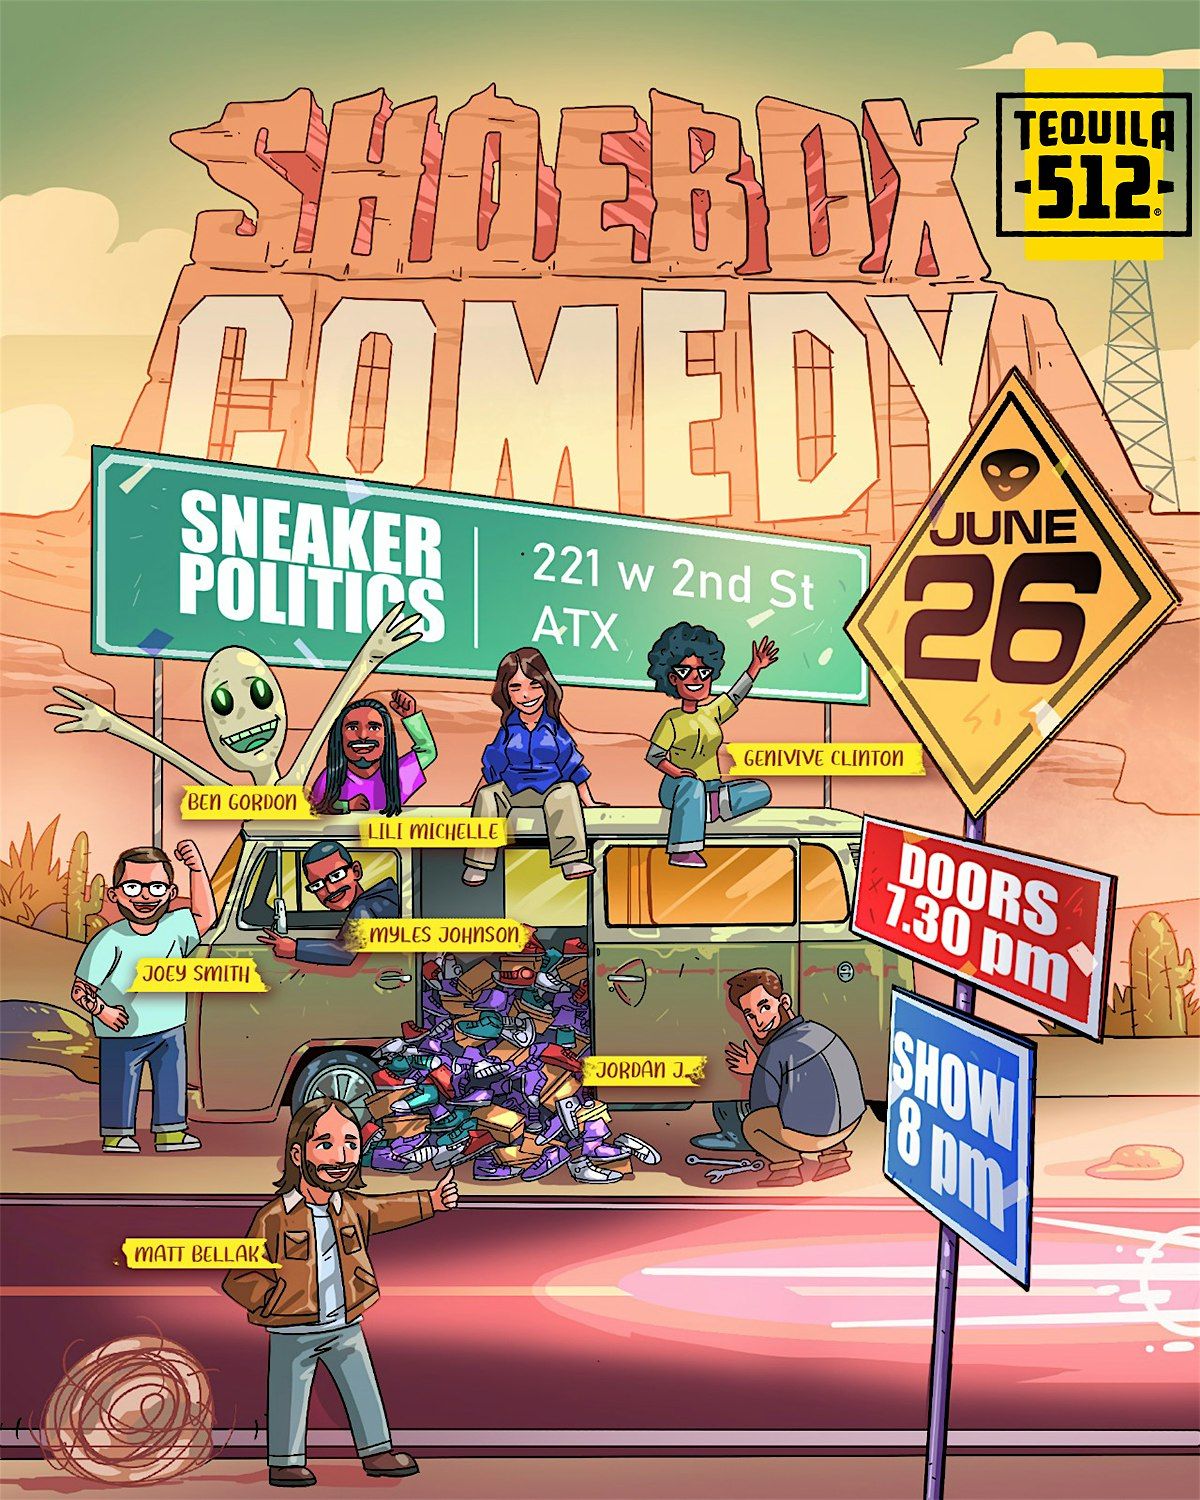 Shoebox Comedy June 26th! 8PM!